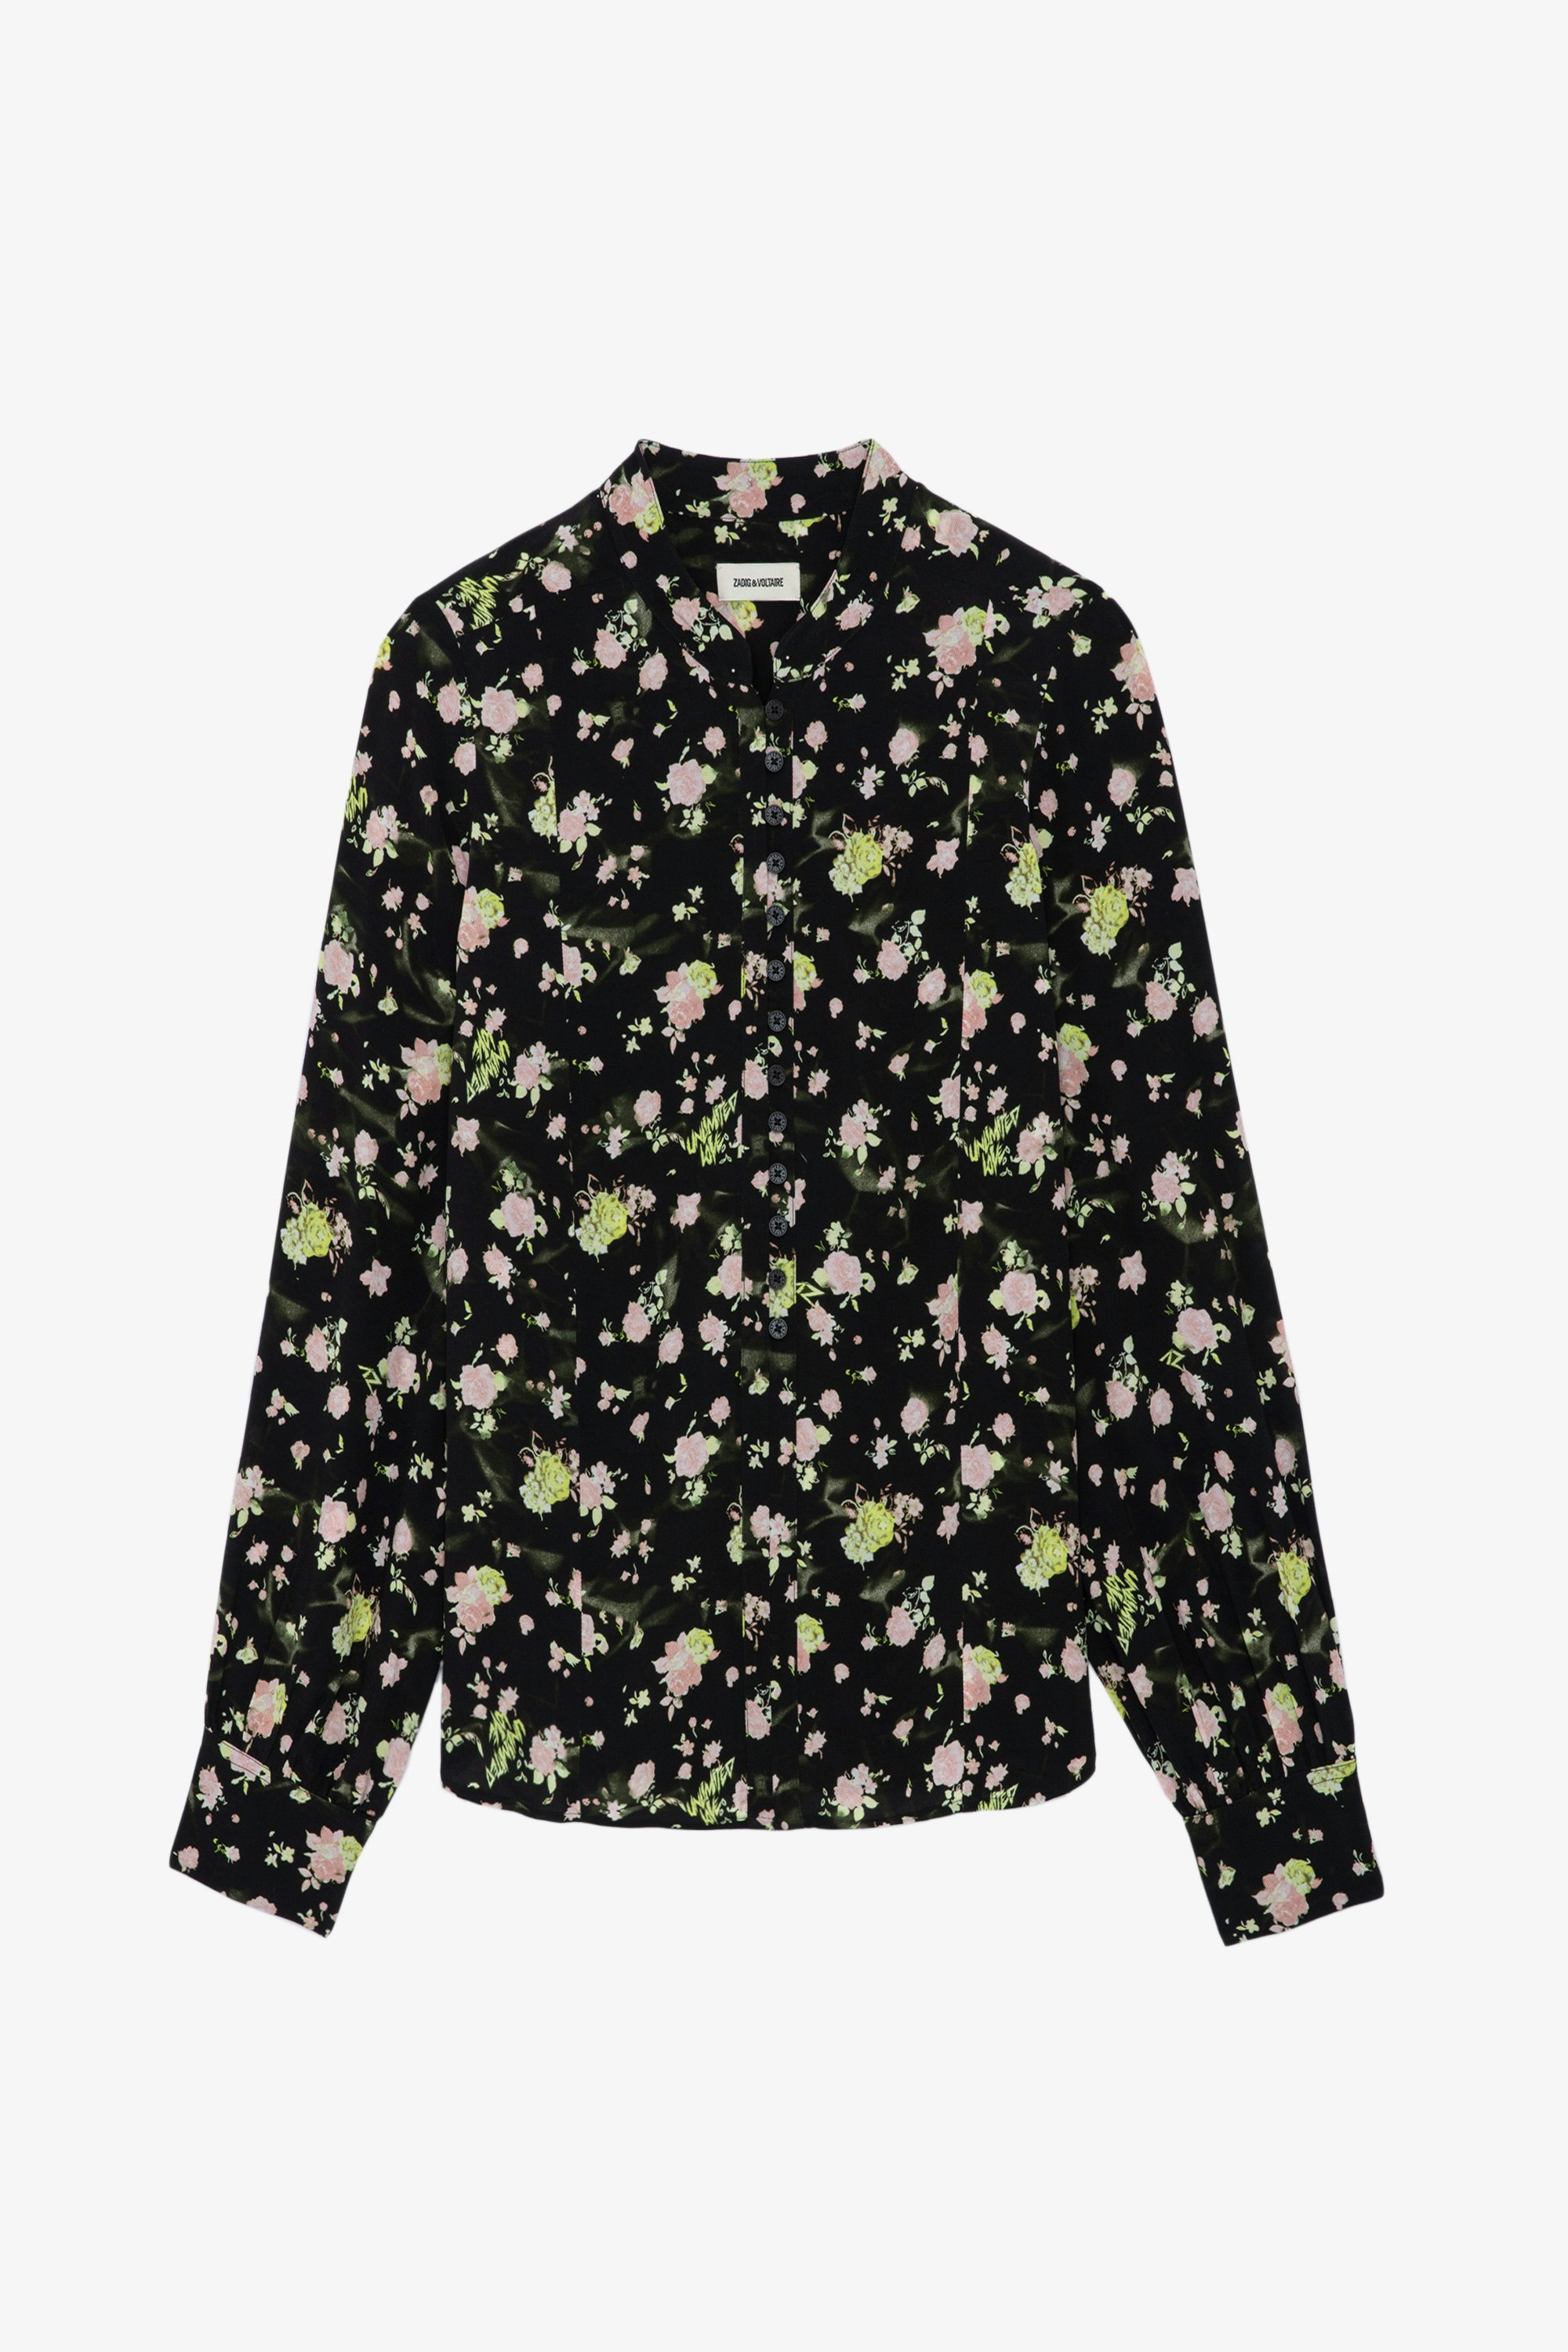 Twina Soft Crinkle Roses Shirt - Women’s black floral-print blouse.